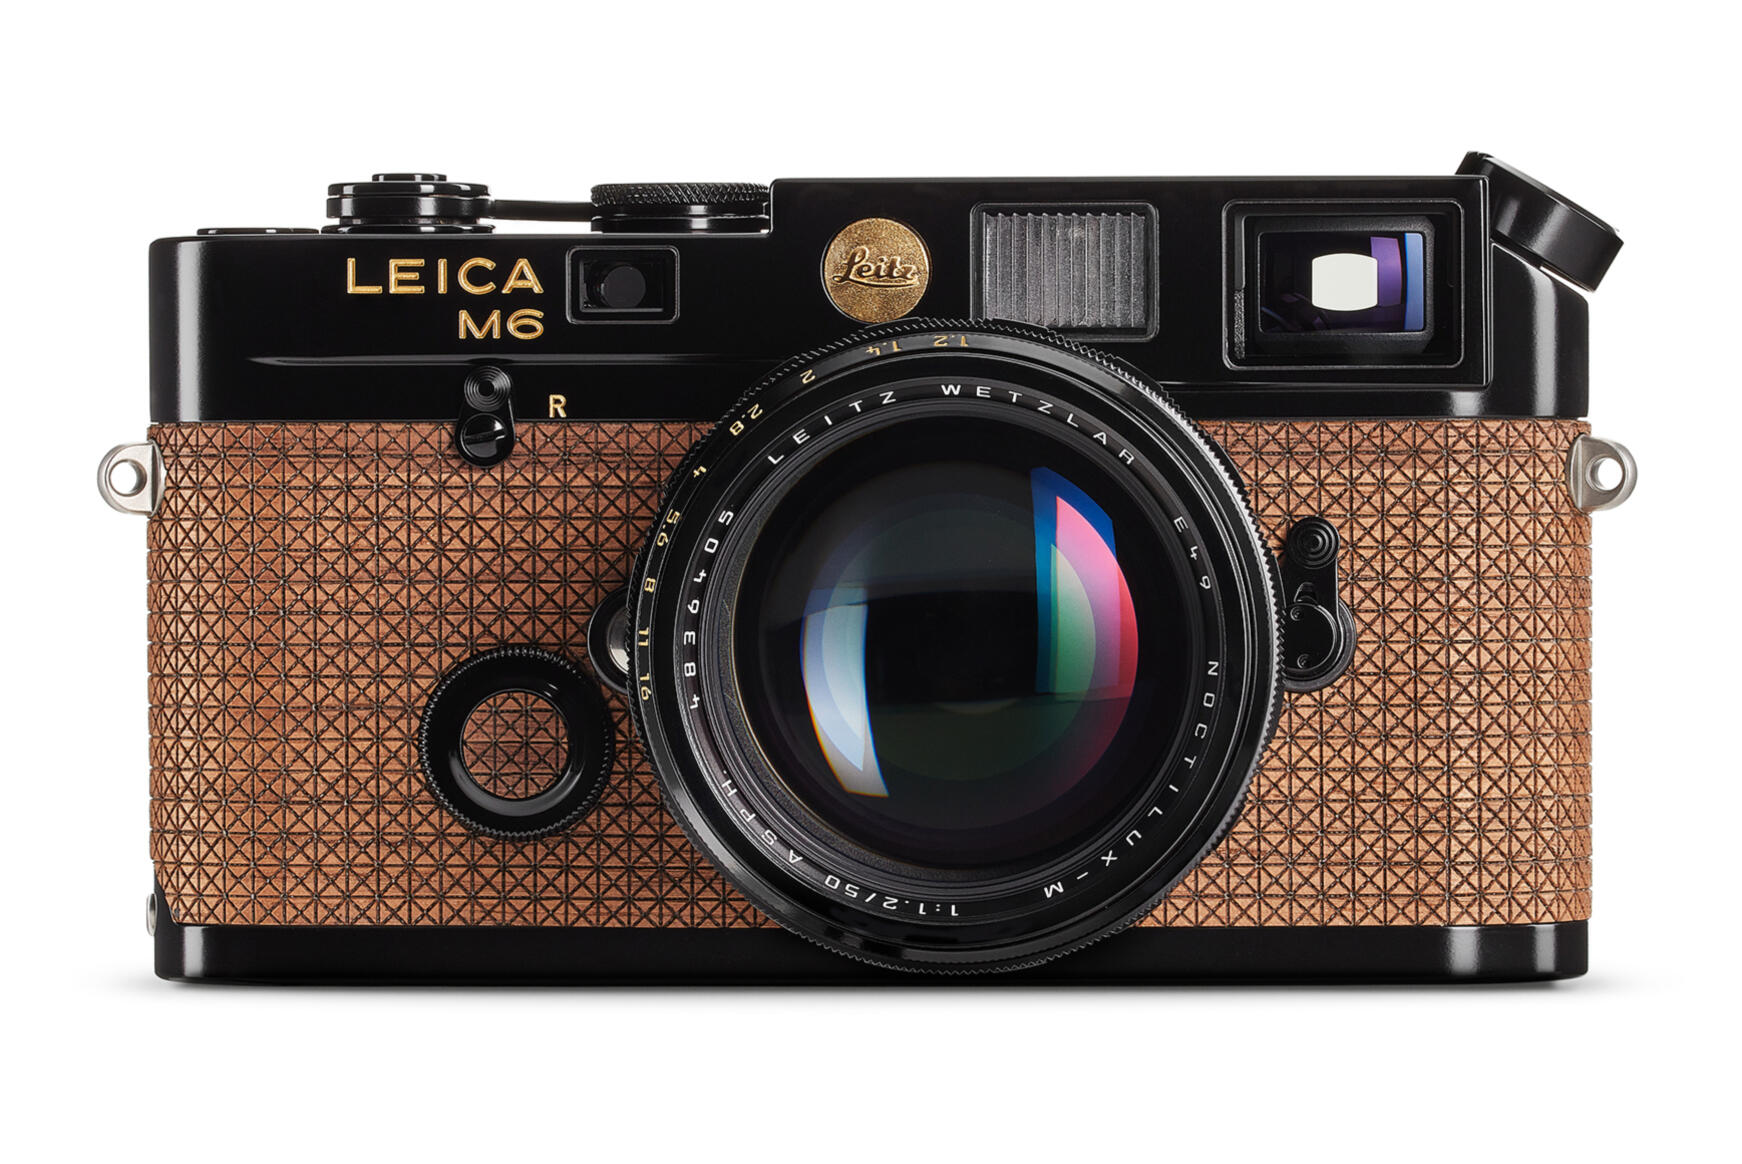 New Leica M6 “Leitz Auction” black paint finish limited edition